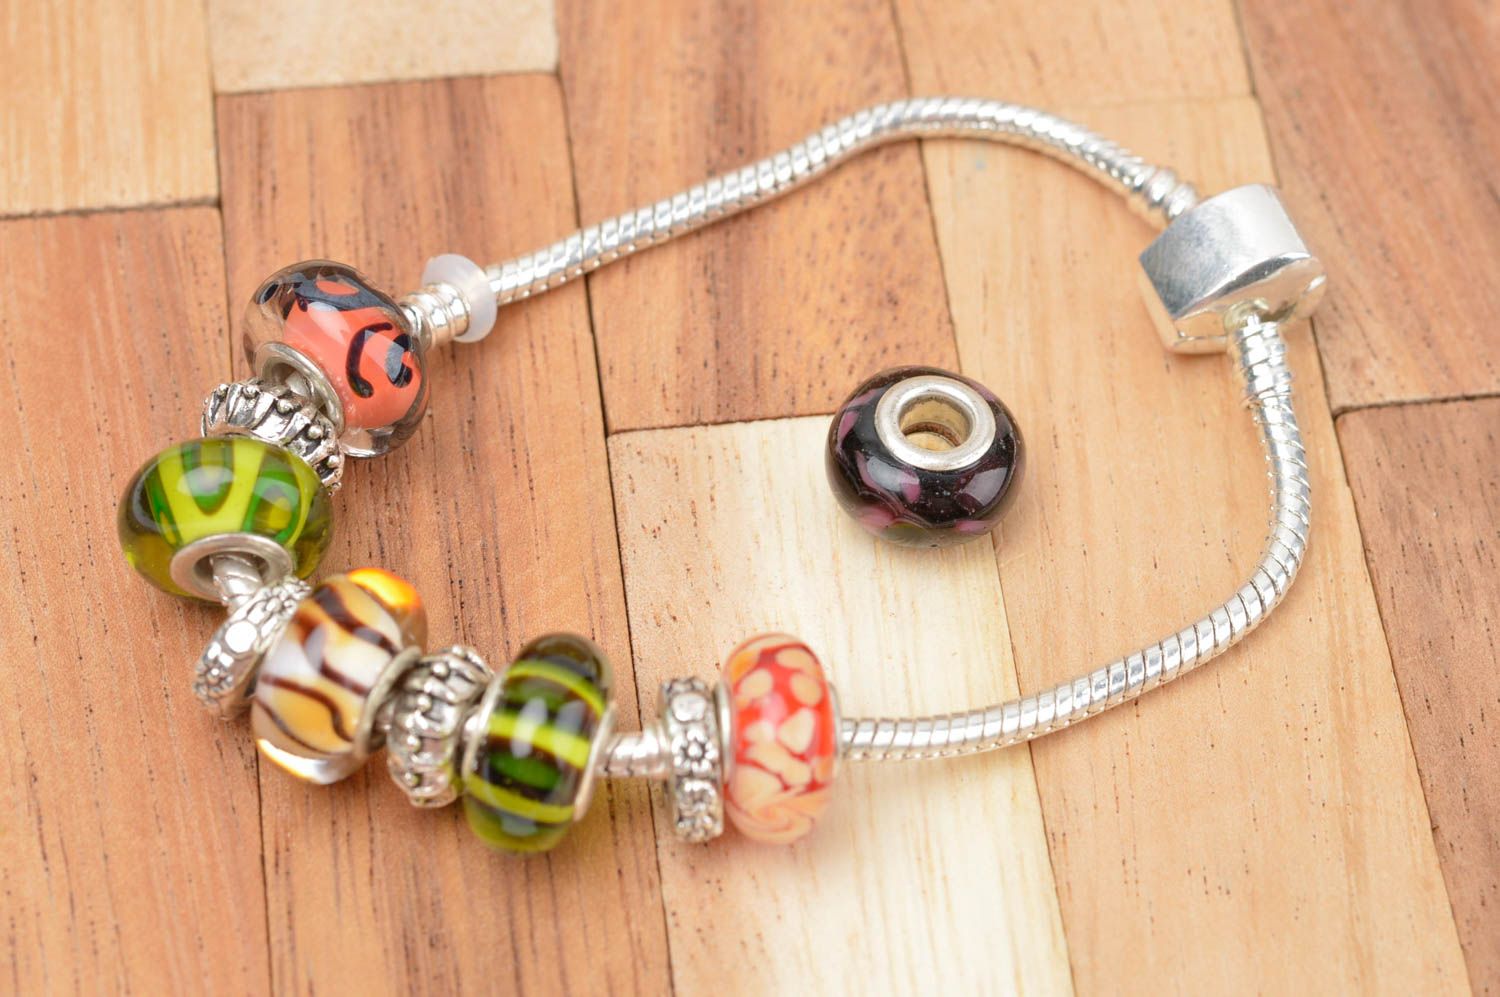 Handmade glass bead jewelry making ideas unusual jewelry findings small gifts photo 4